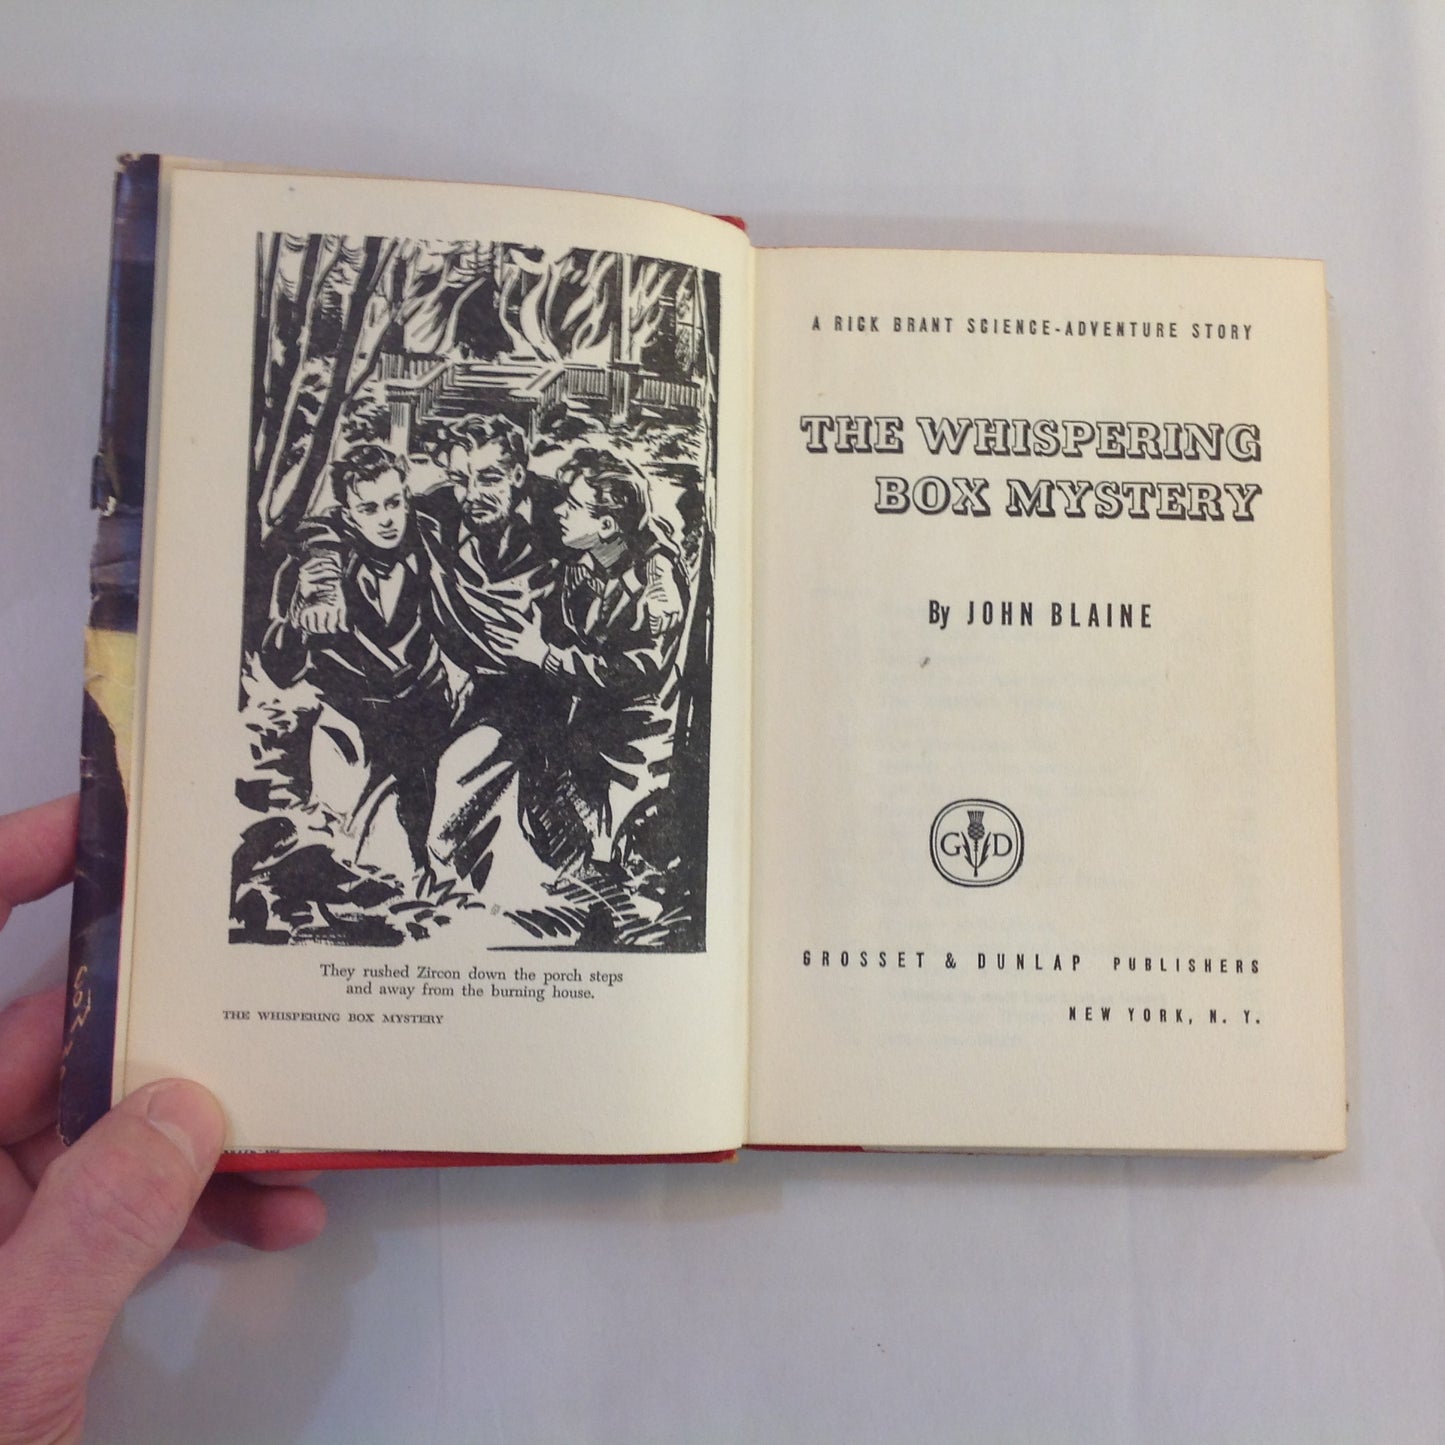 Vintage 1948 Hardcover The Whispering Box Mystery: A Rick Brant Science-Adventure Story John Blaine